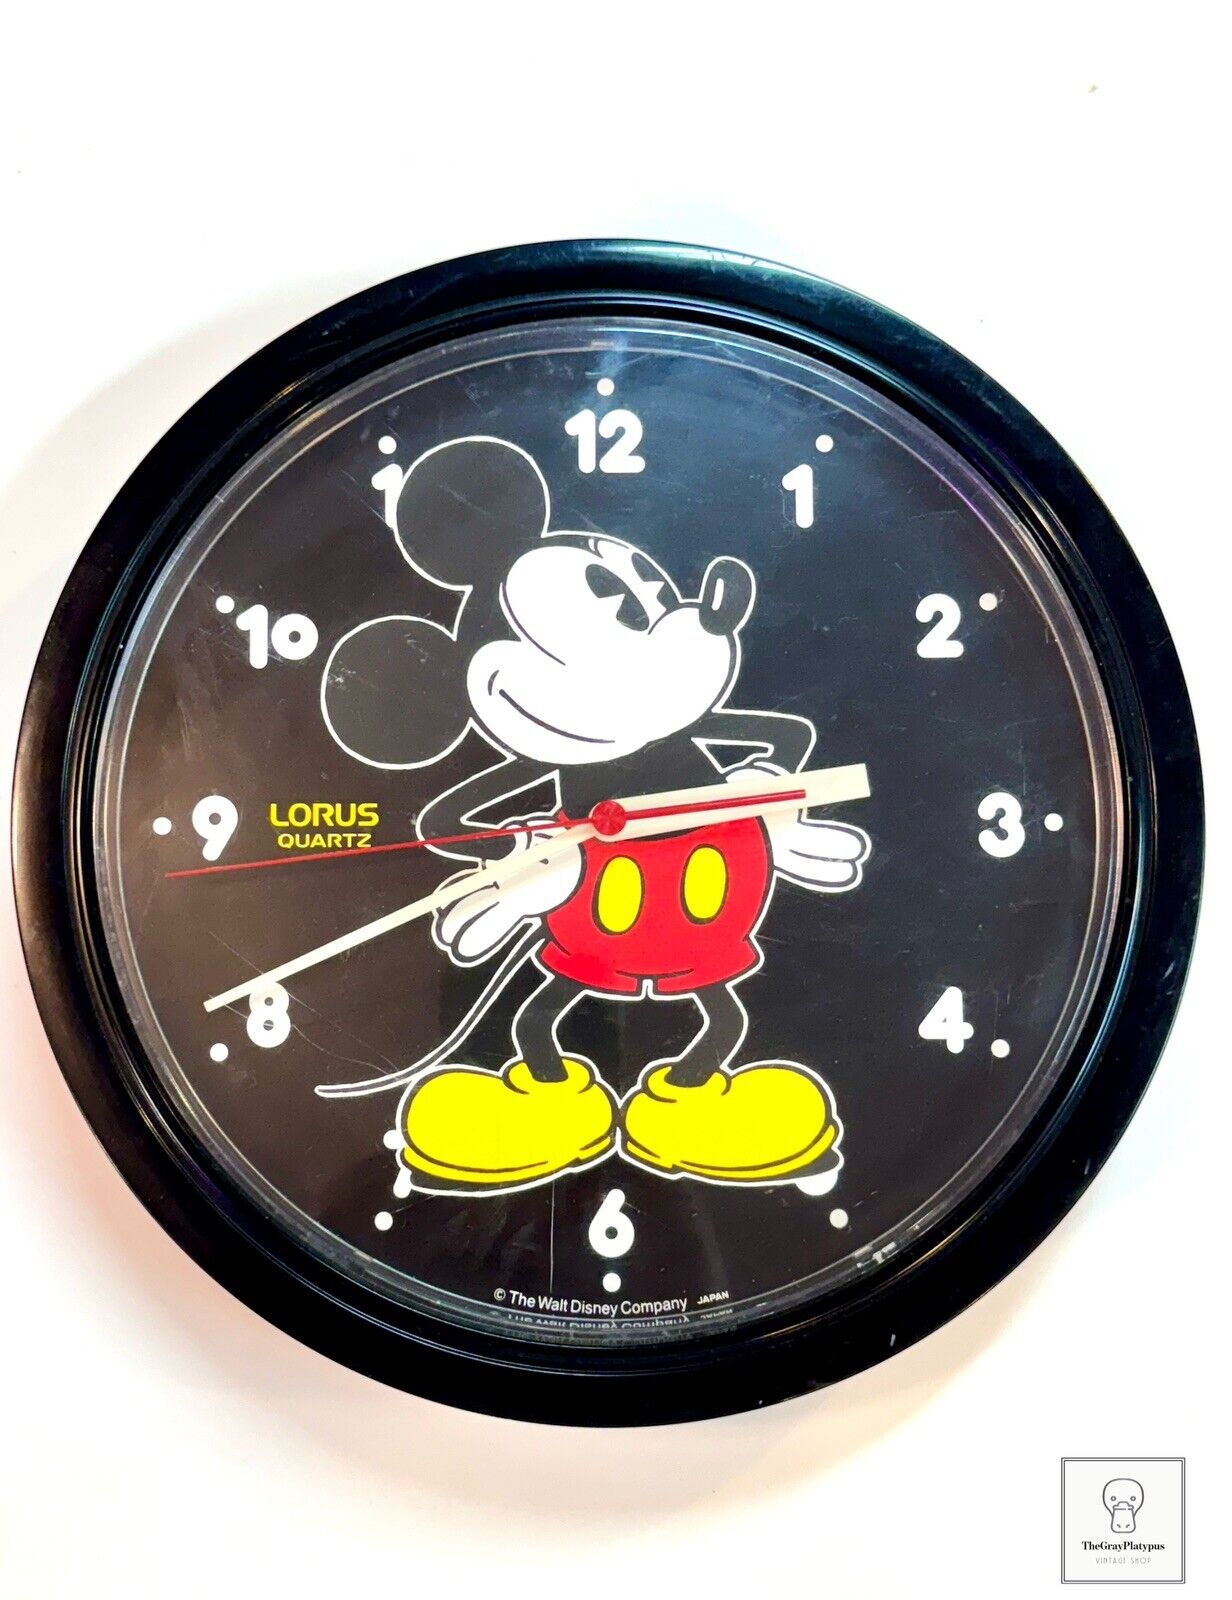 Vintage Walt Disney Mickey Mouse Wall Clock / Lorus Quartz / Made Japan / Works